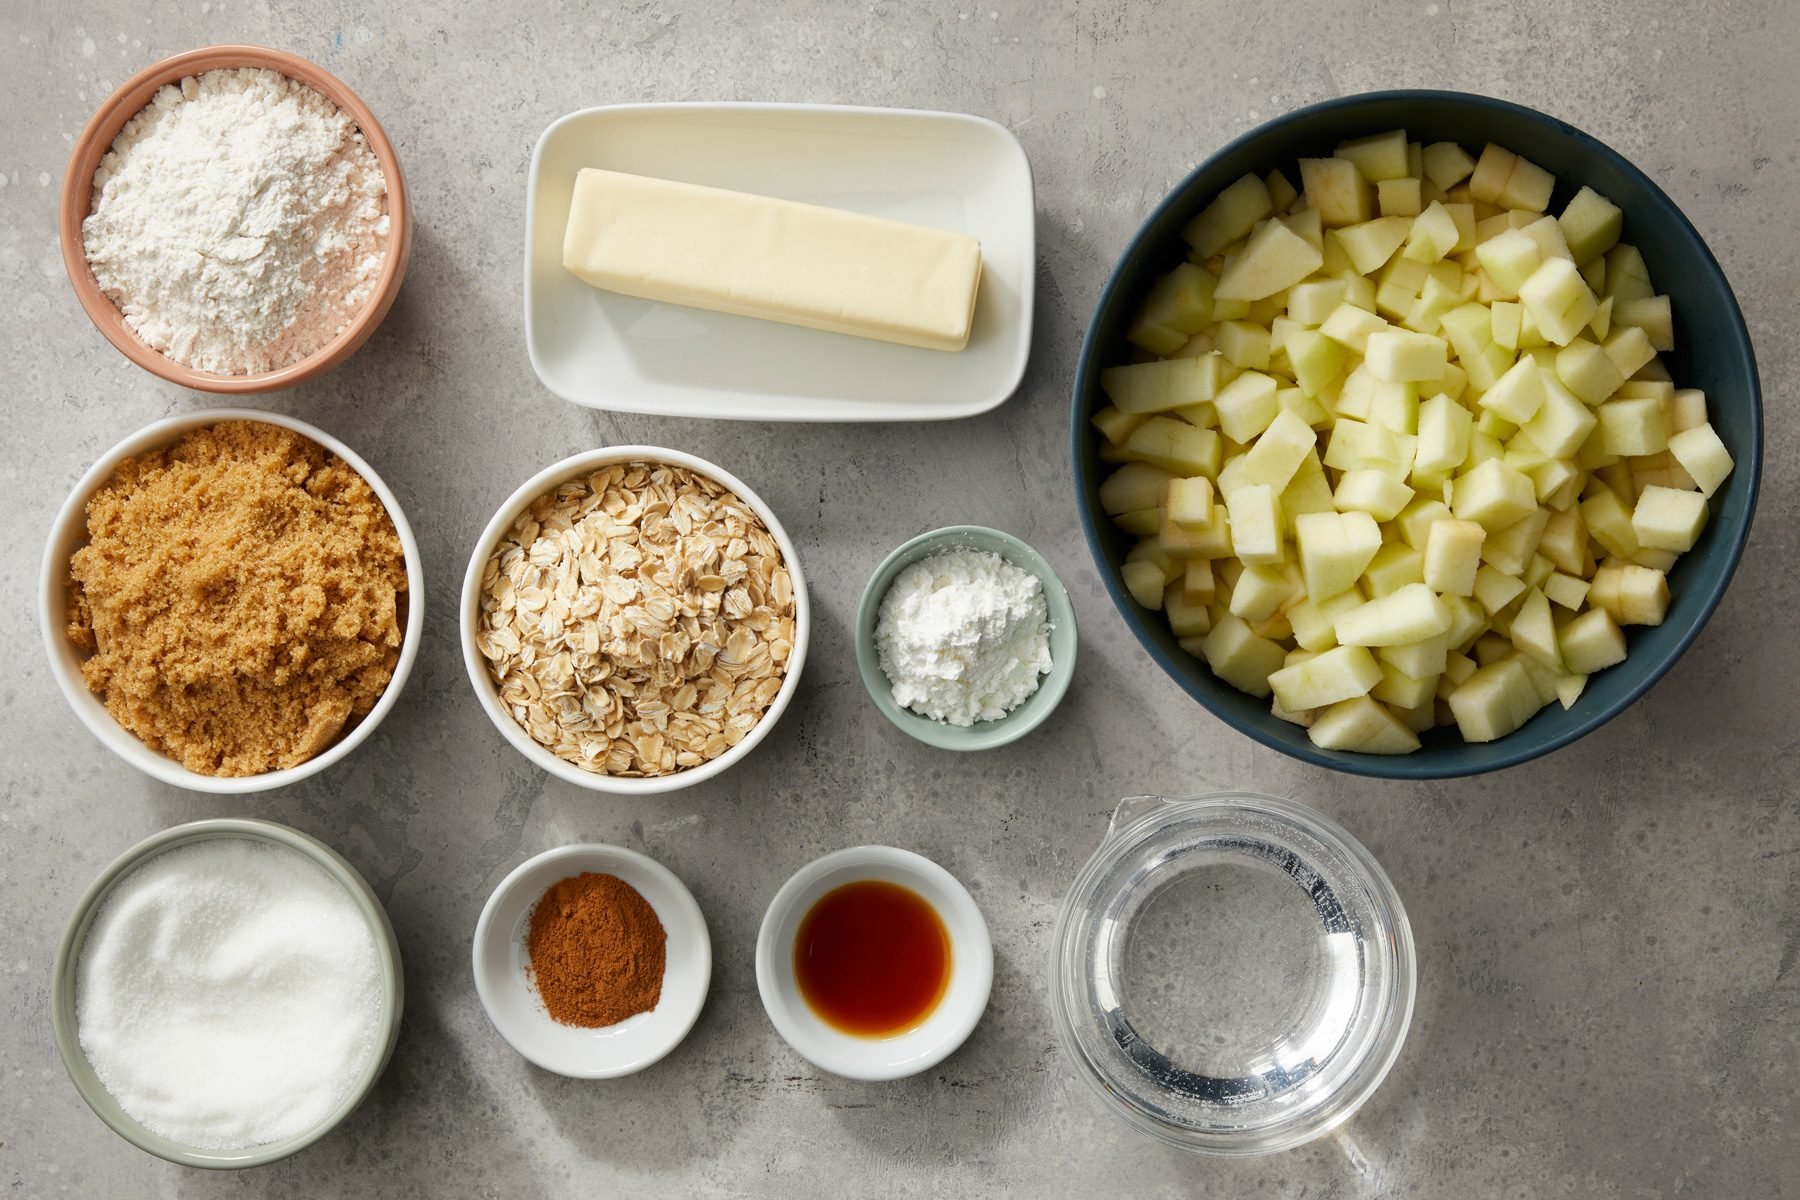 Ingredients of Apple Crisp arranged on a table